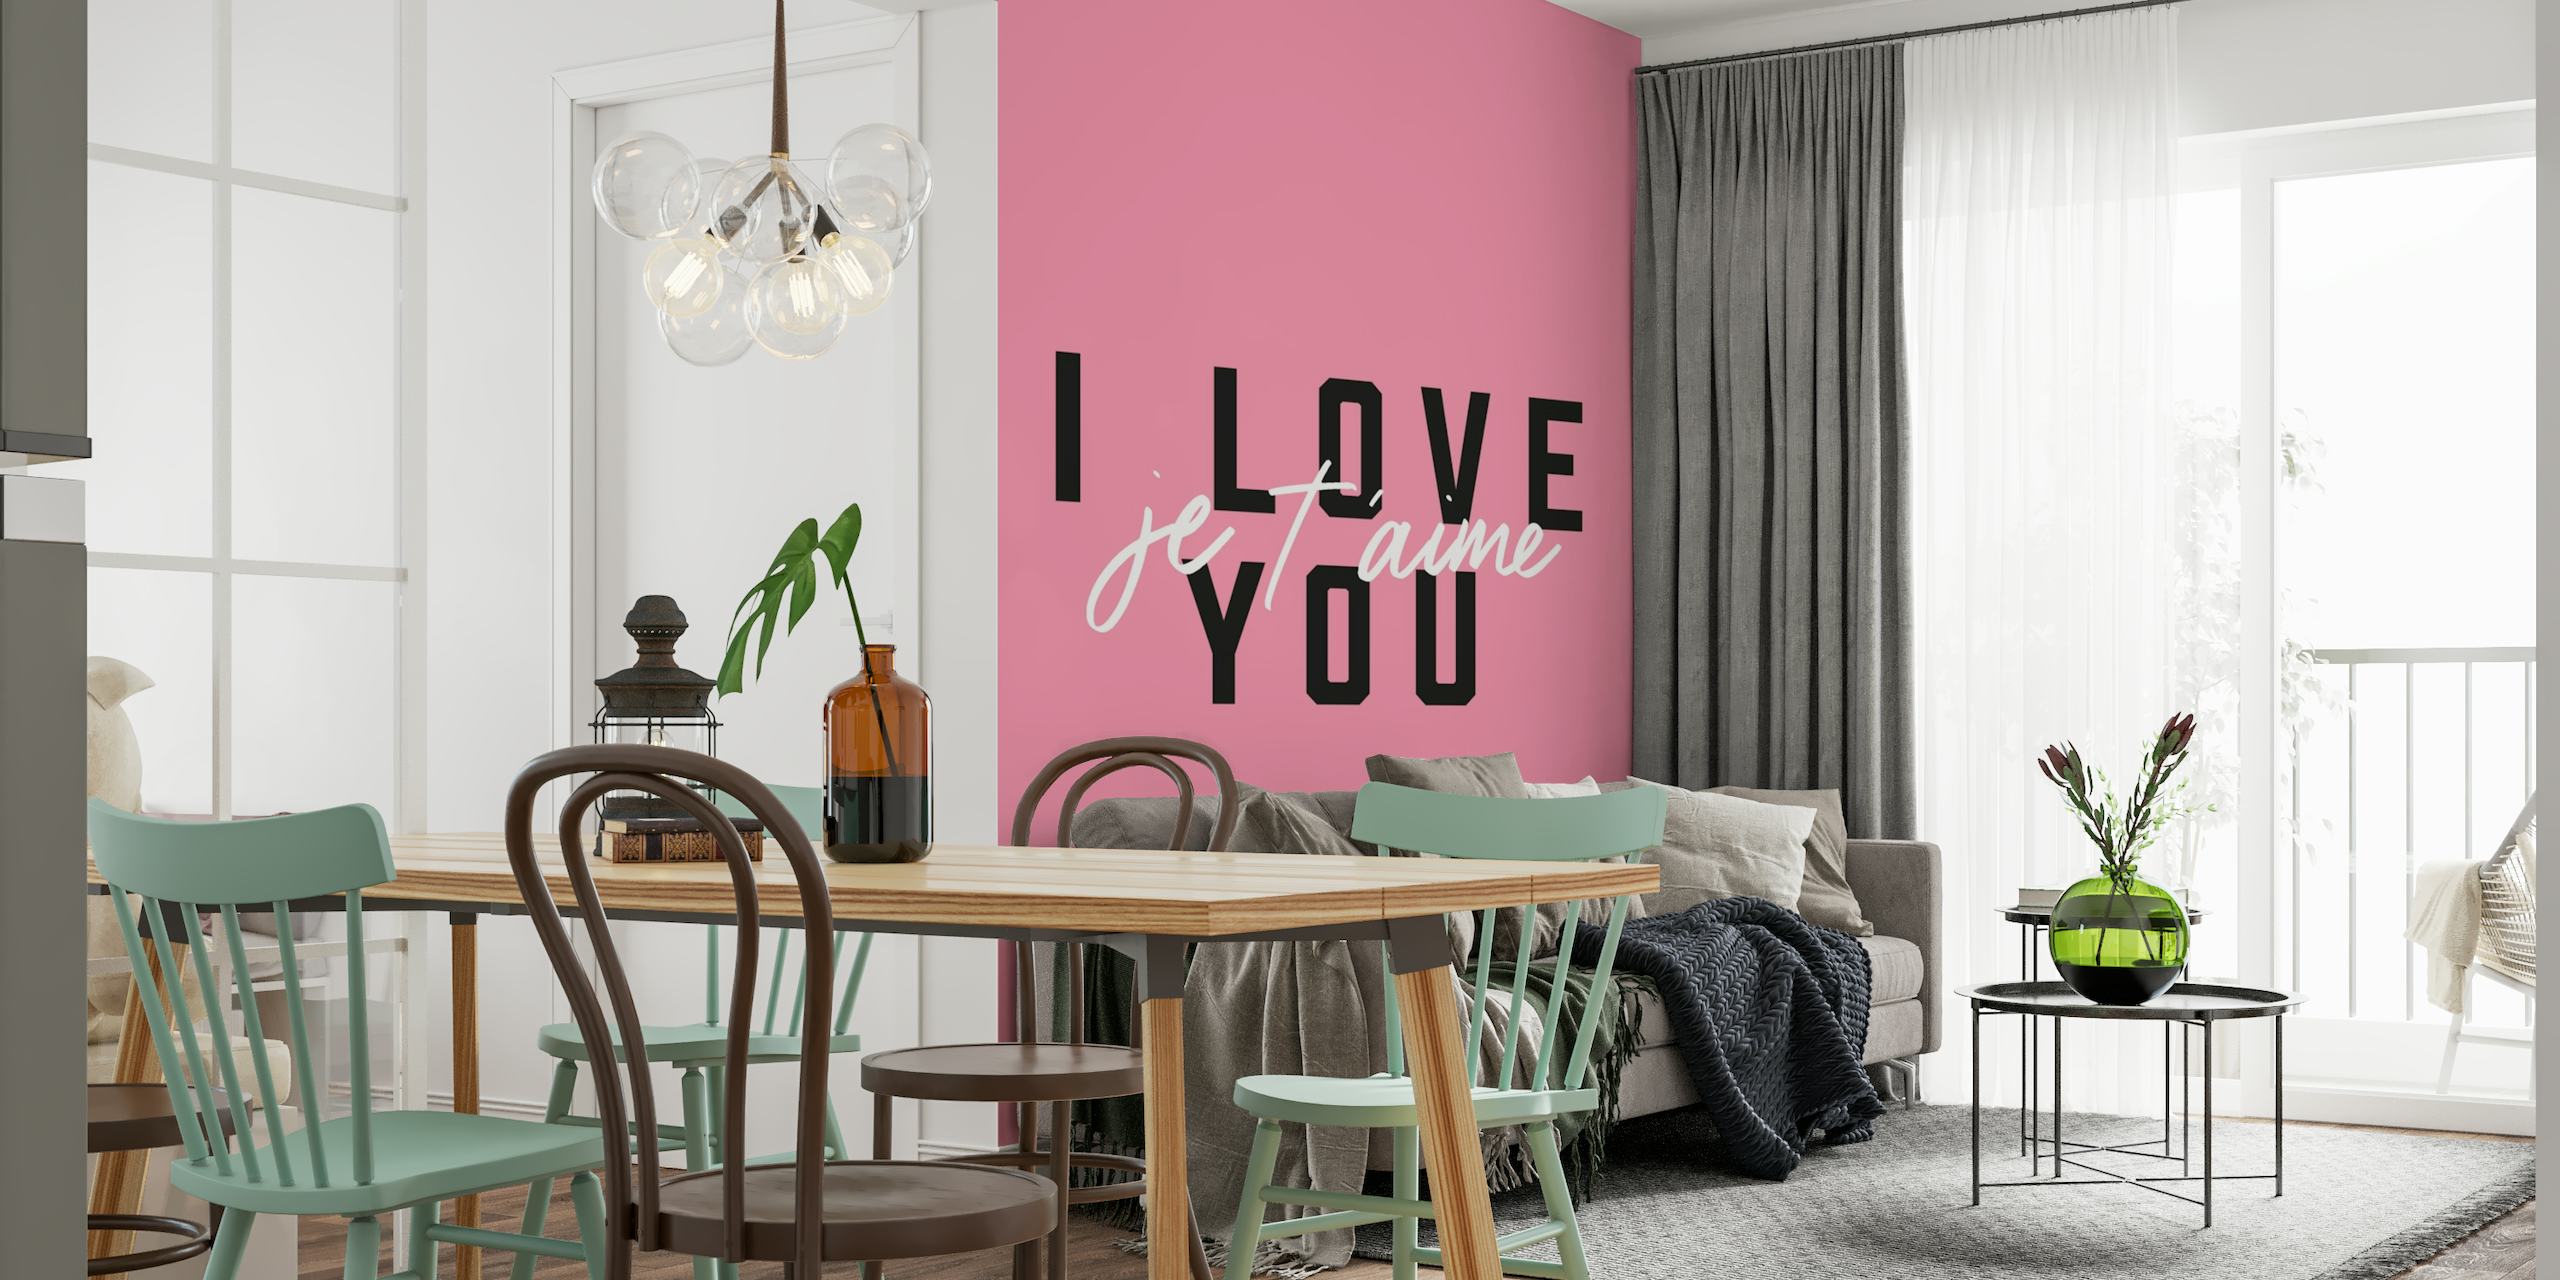 I Love You wallpaper